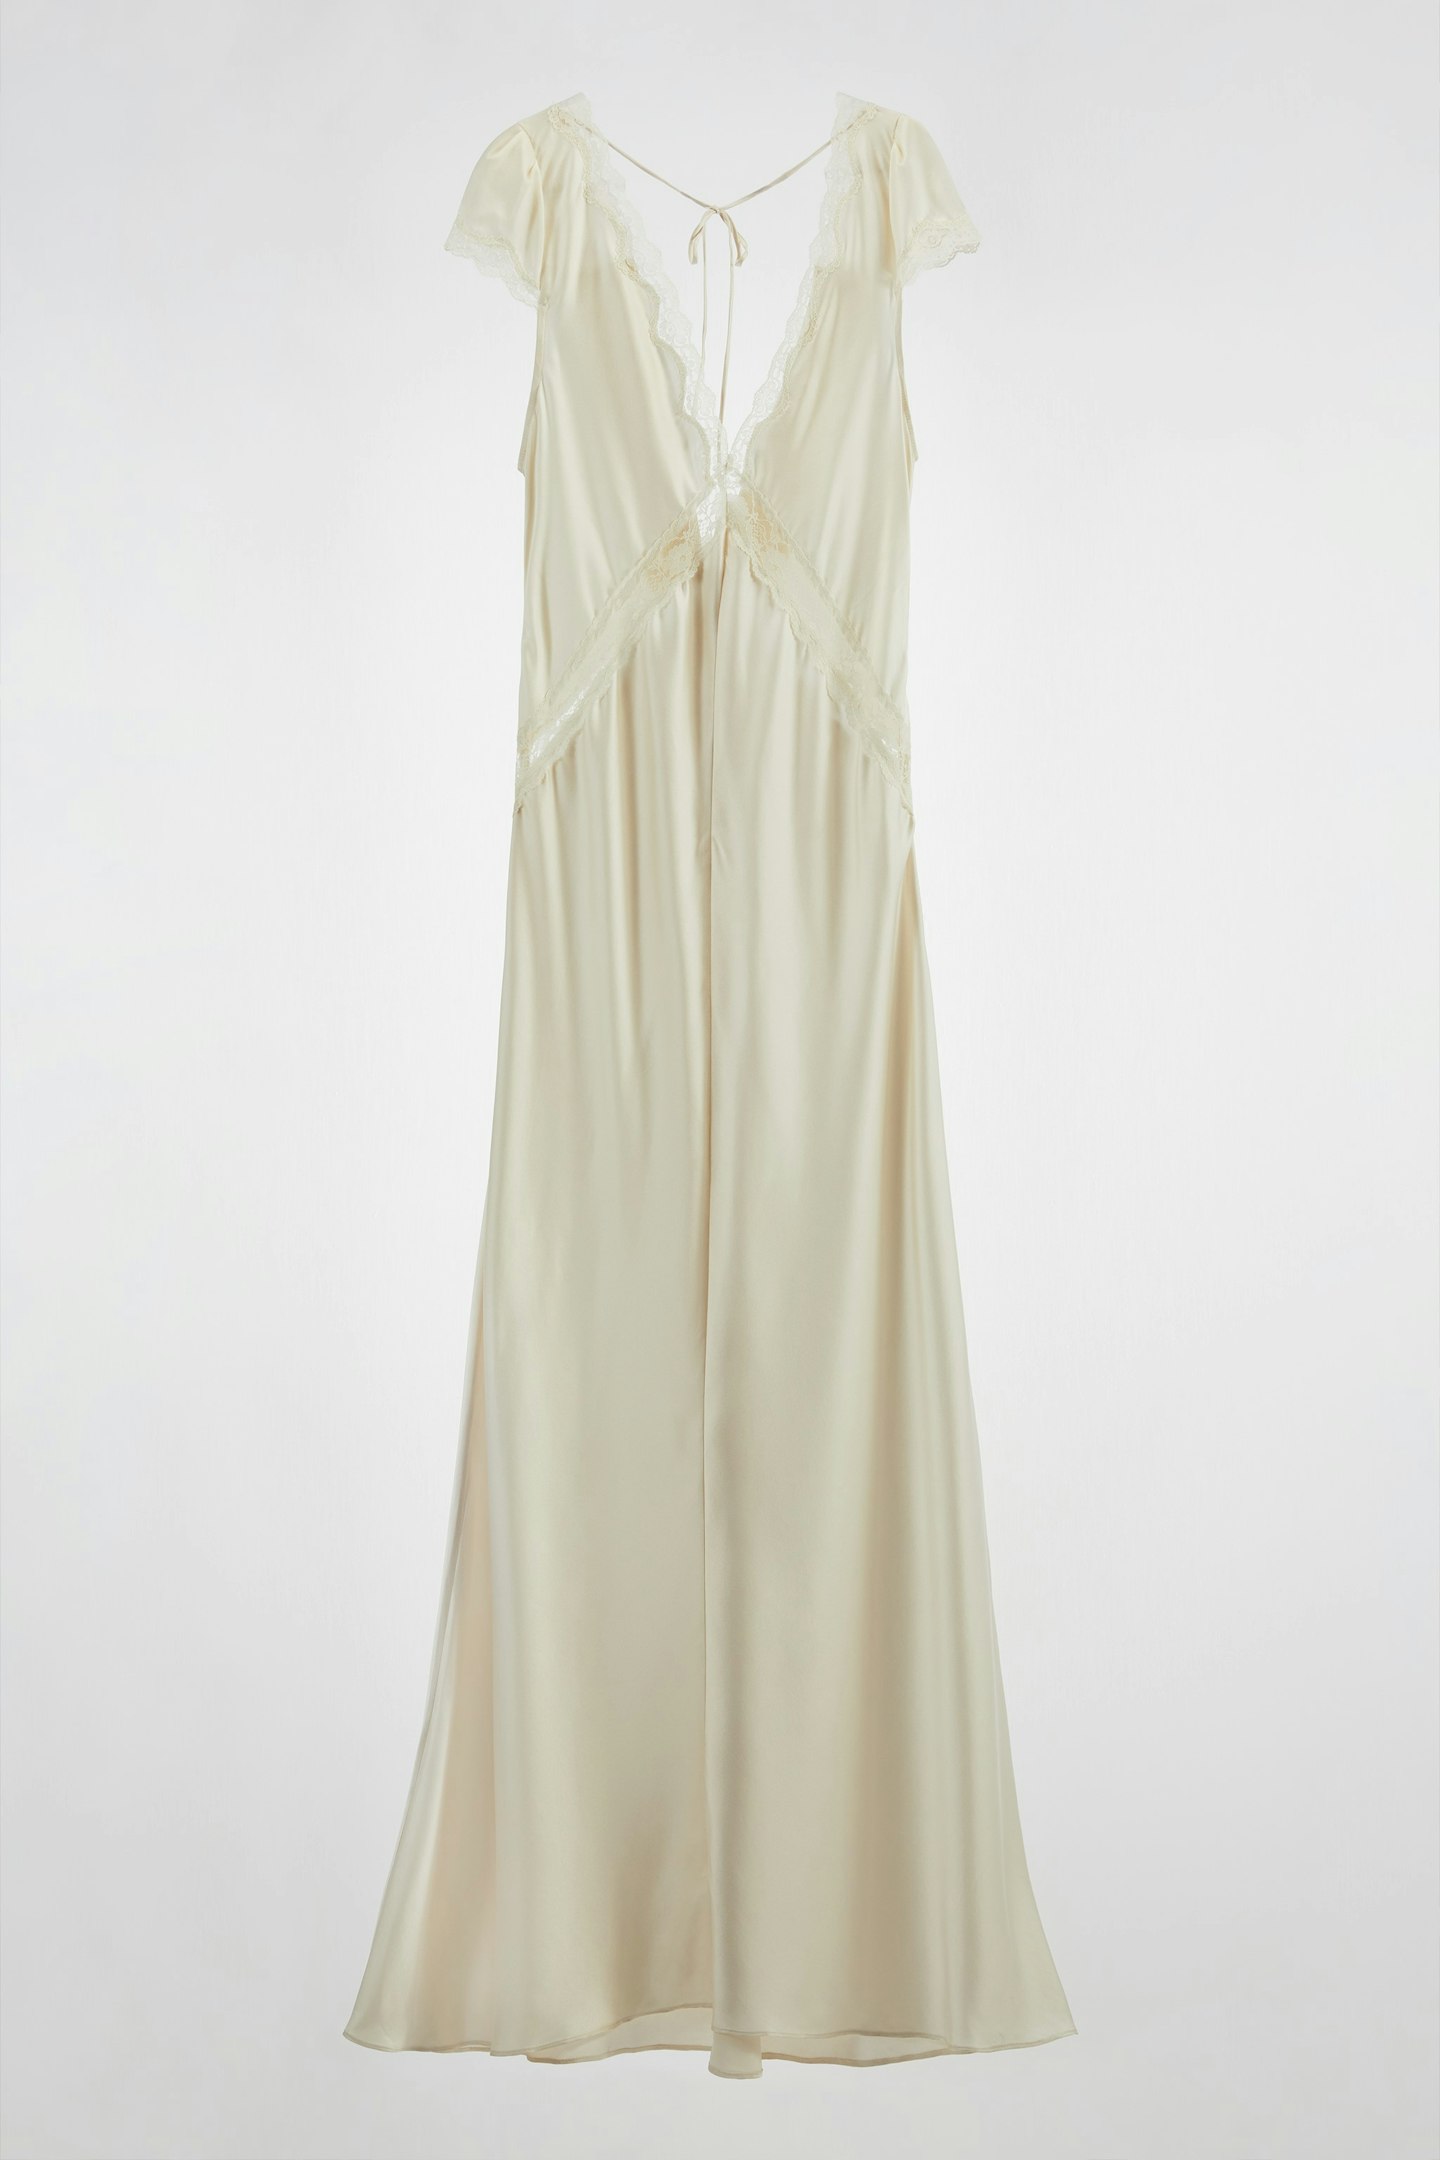 Zara, Long Silk Bridal Dress, £159